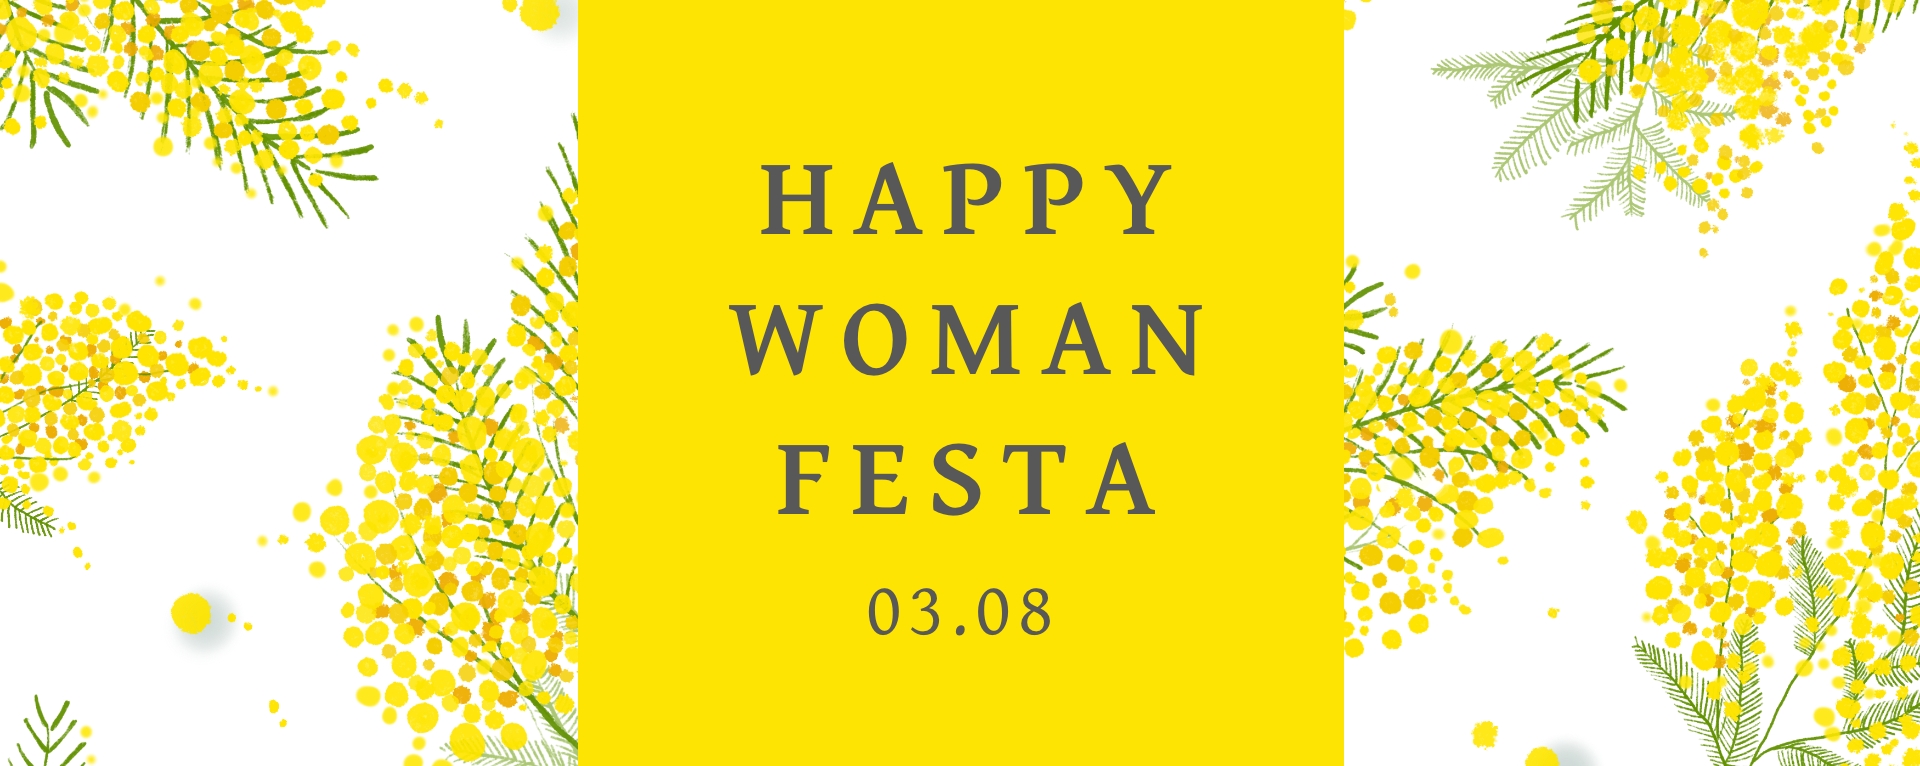 HAPPY WOMAN FESTA